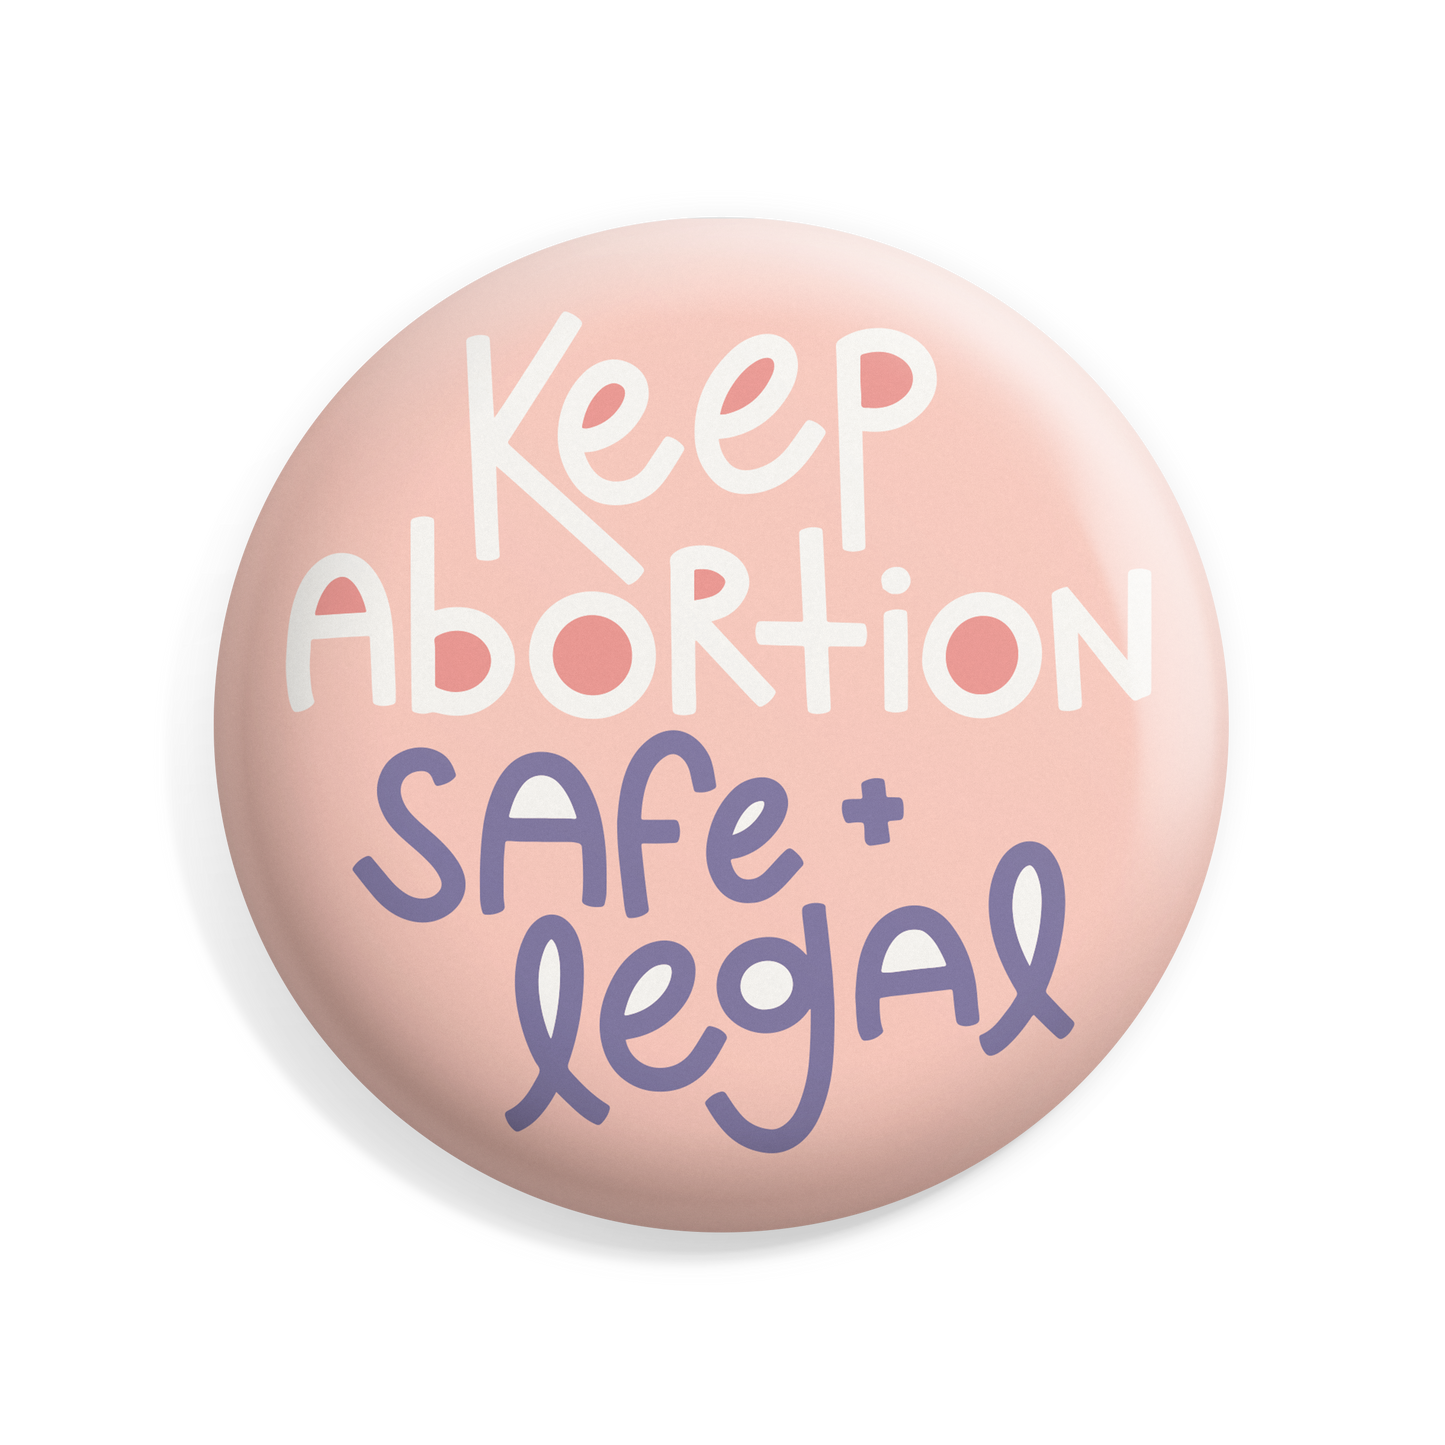 Keep Abortion Safe & Legal Button